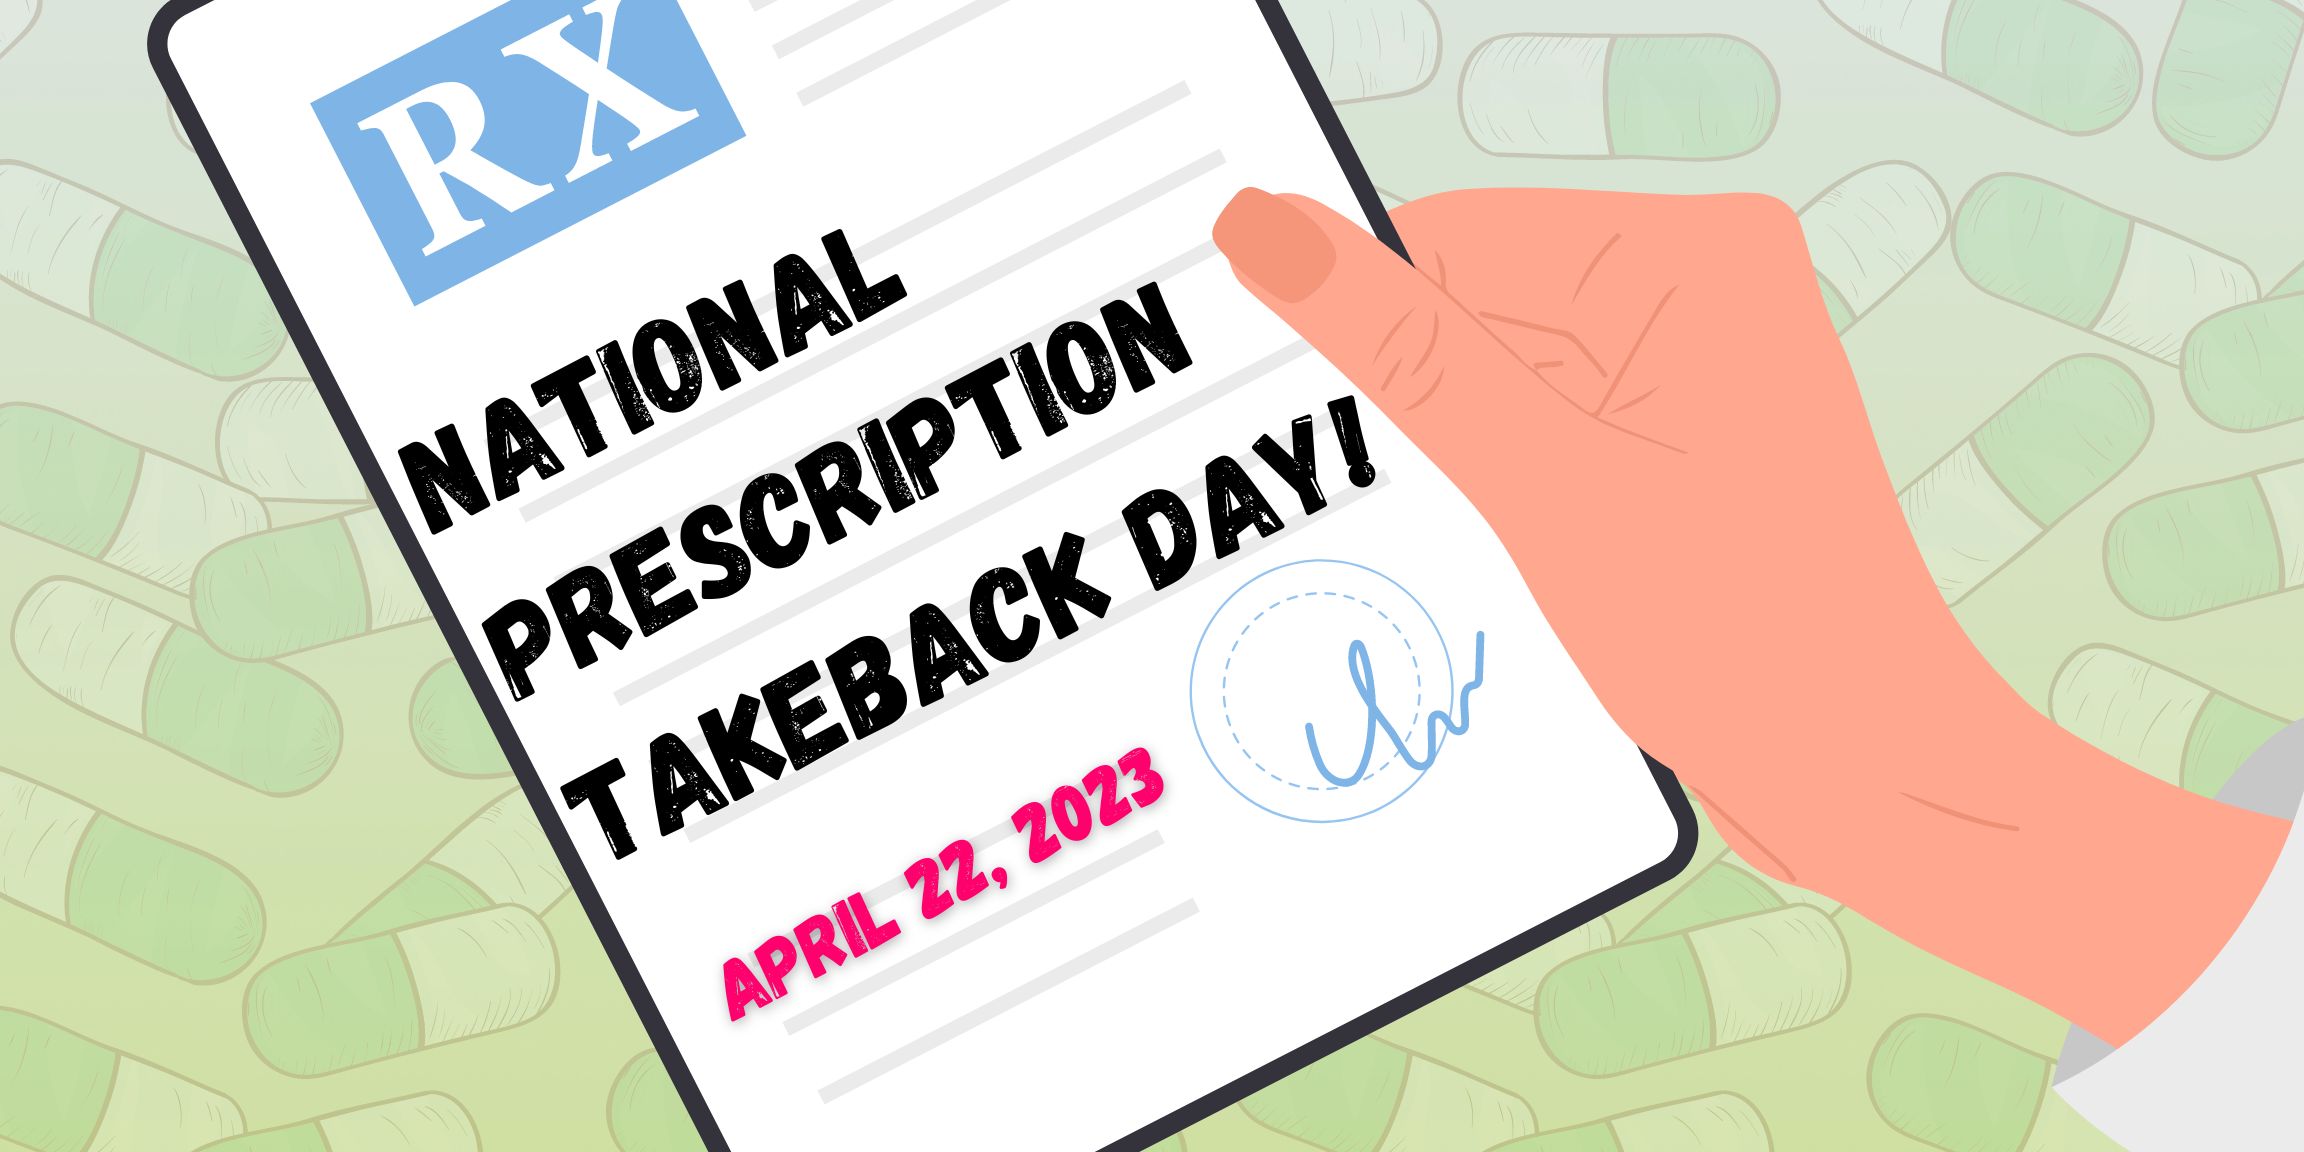 National Prescription Take Back Day Is April 22 The Kim Foundation